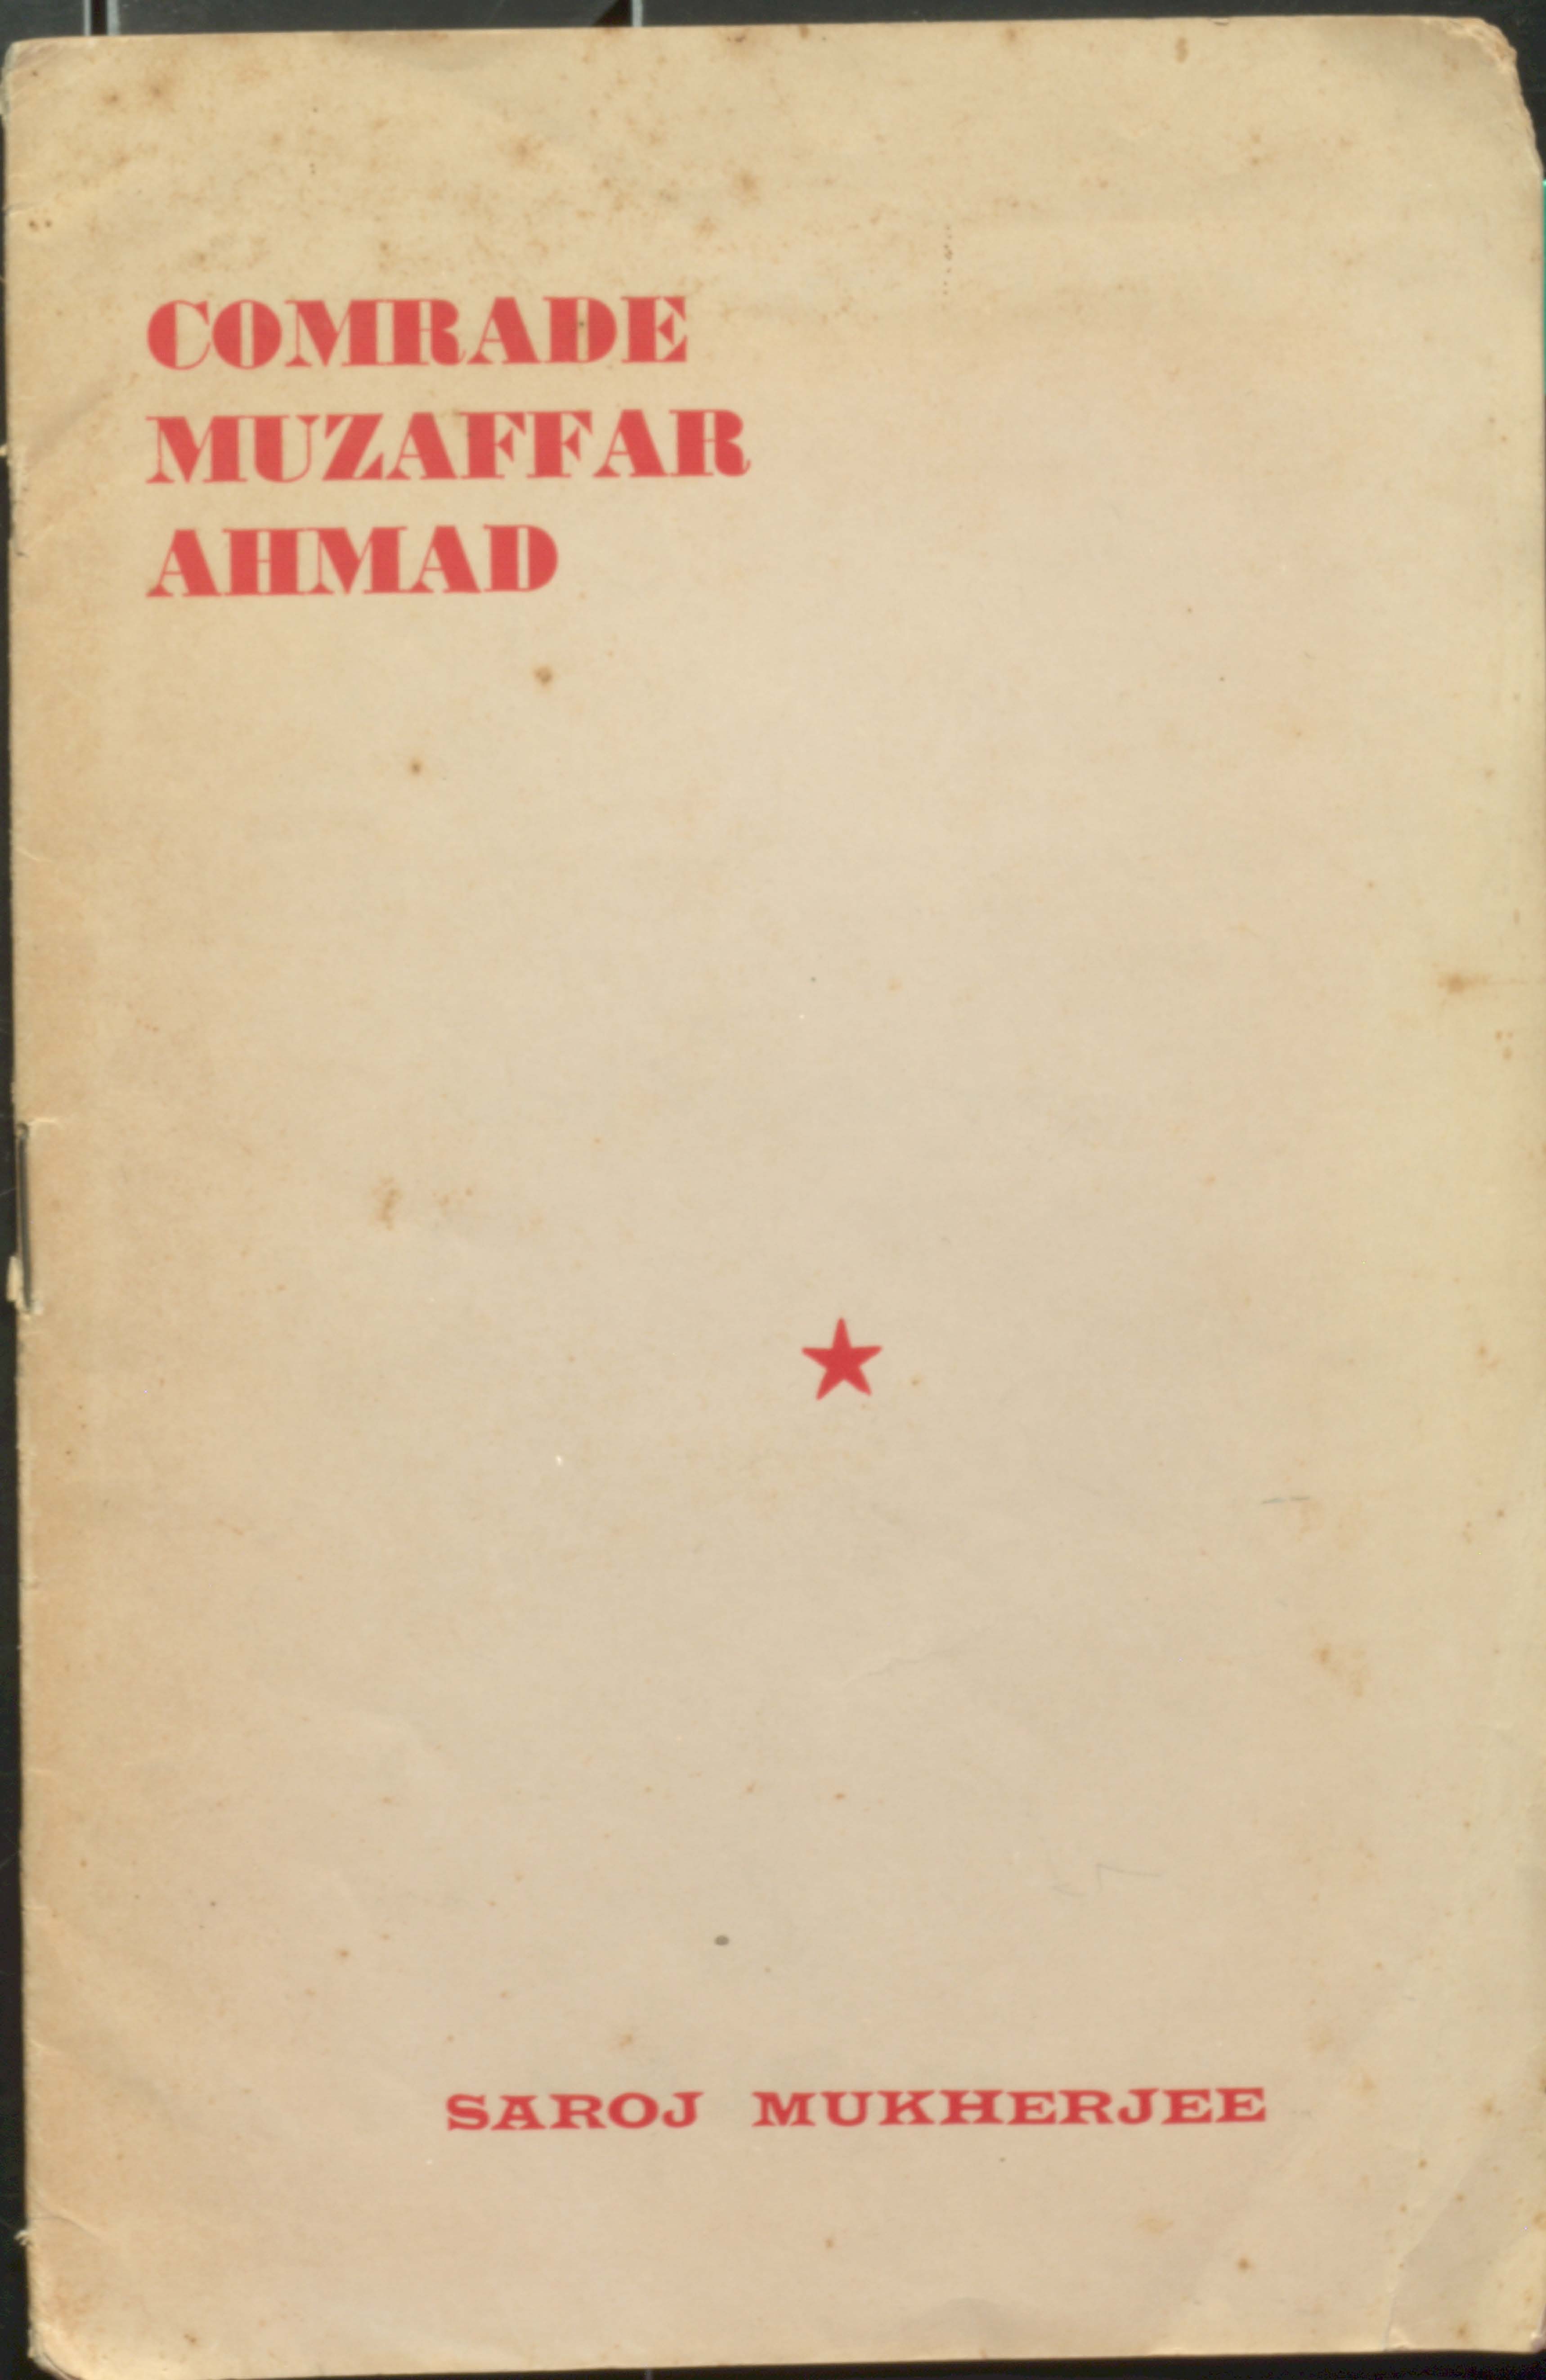 Comrade Muzaffar Ahmad